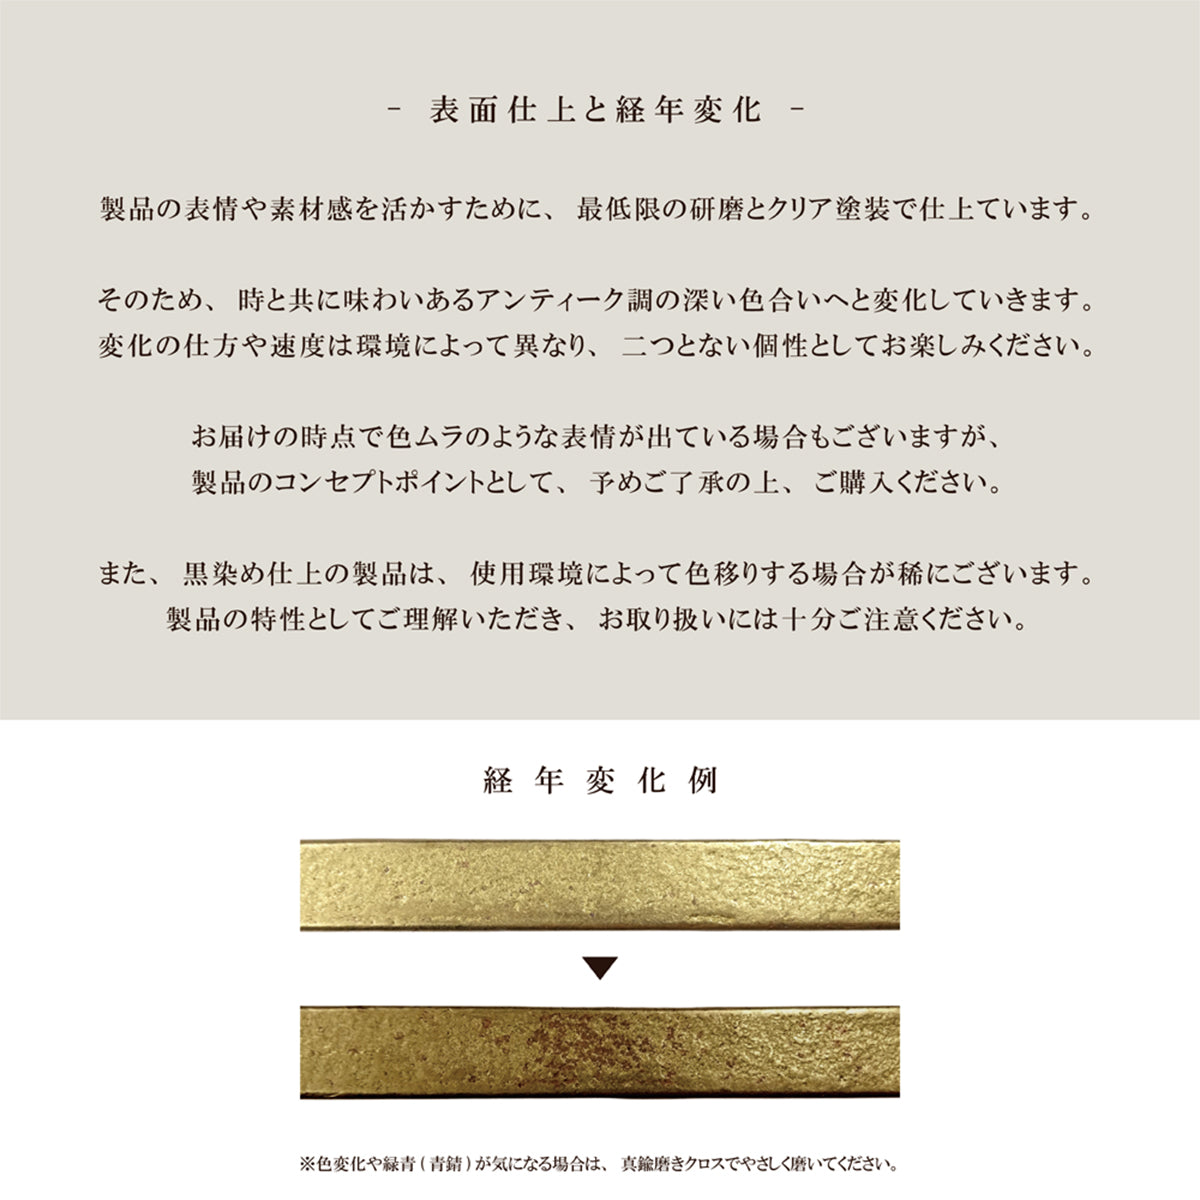 Brass Casting 真鍮鋳物 おしゃれ ハンドル (小コの字 真鍮色 HB-200)